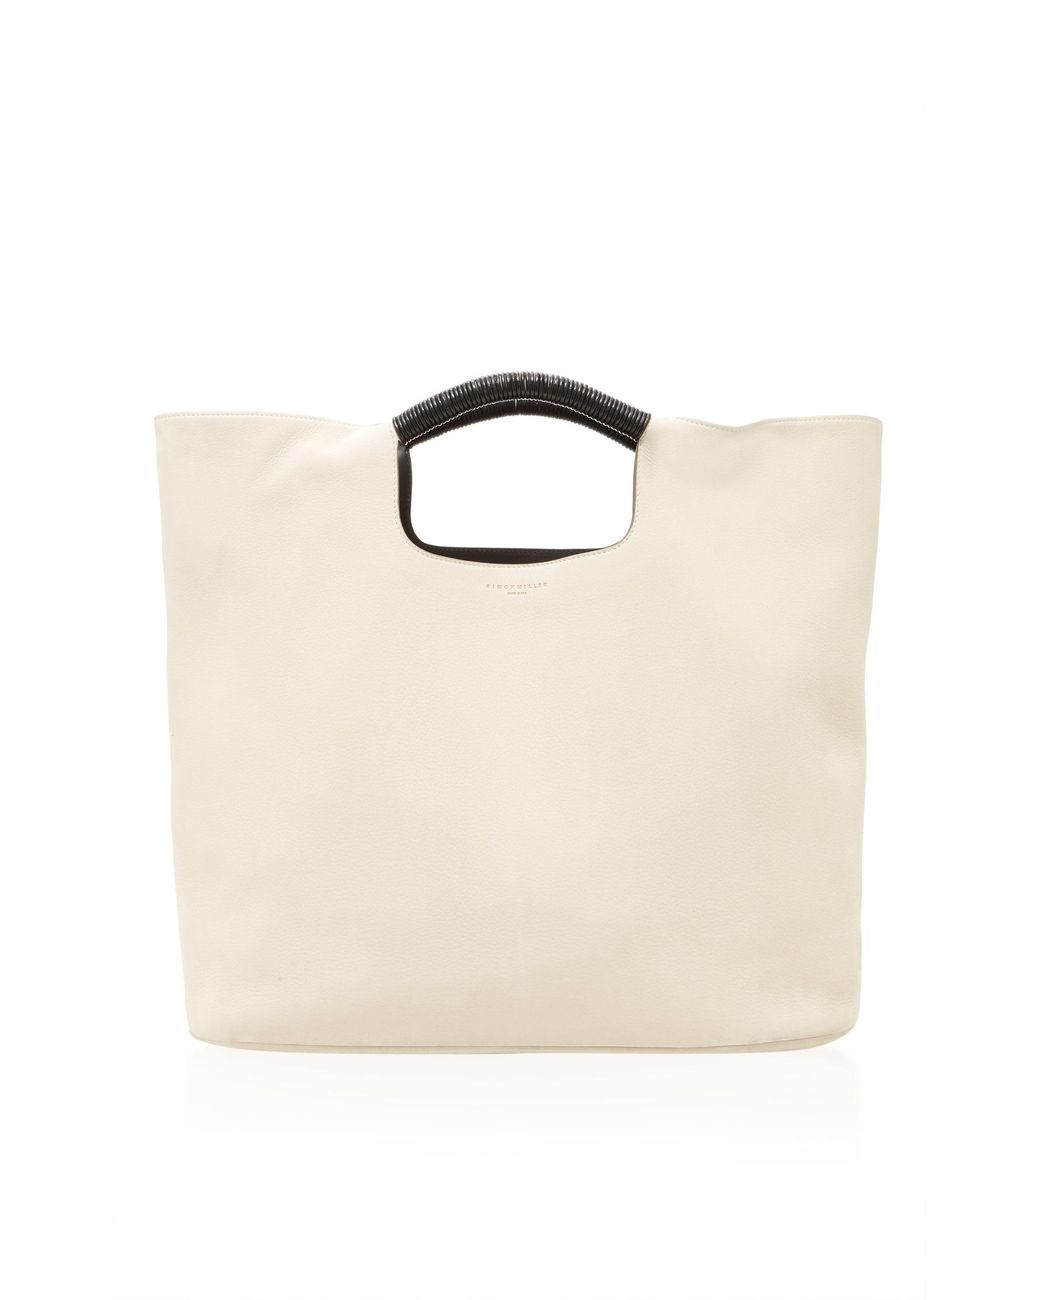 Simon Miller Leather Birch Bag in White | Lyst